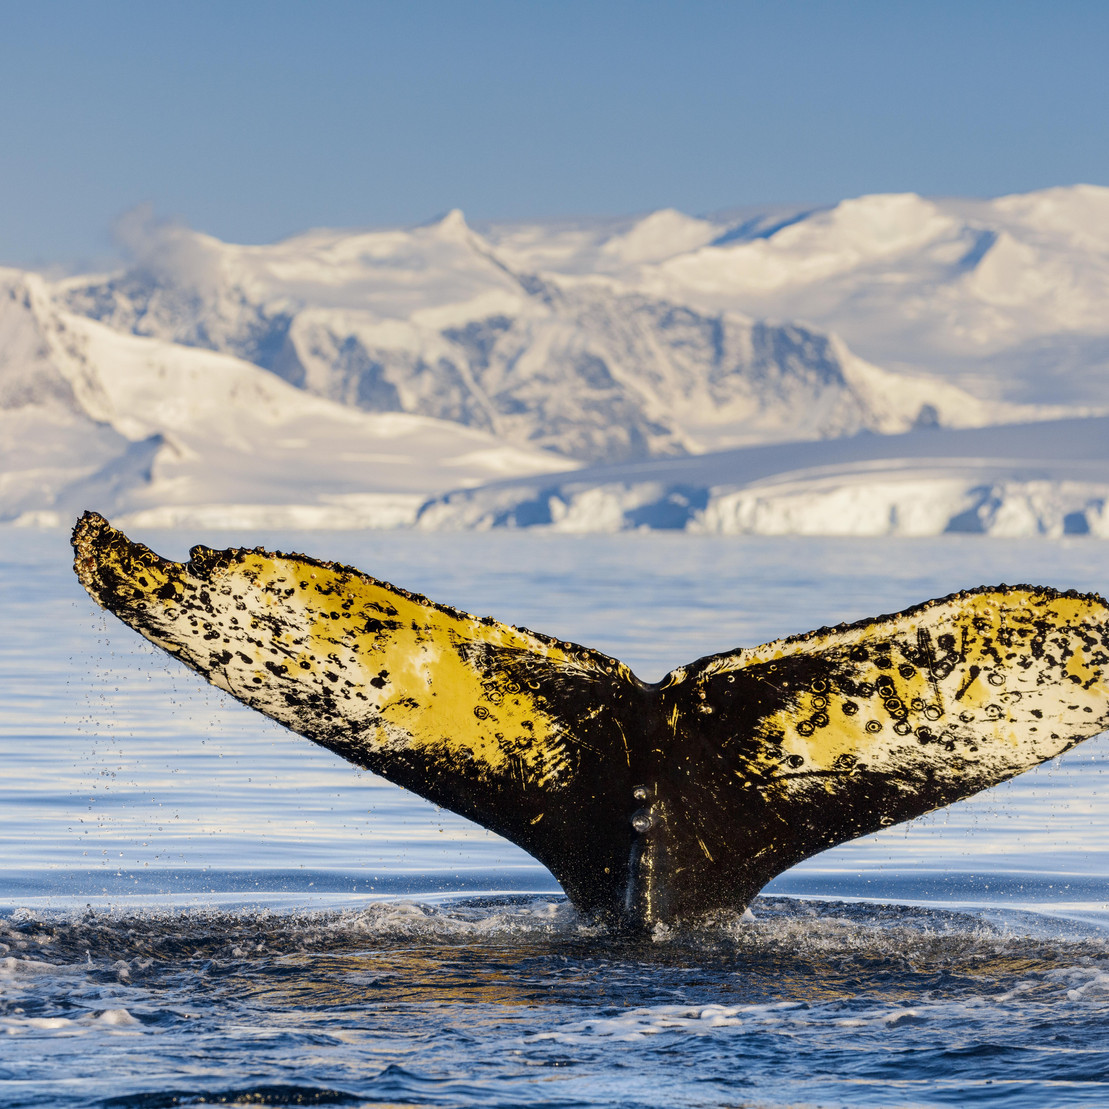 Eine Walflosse ragt aus dem Meer.